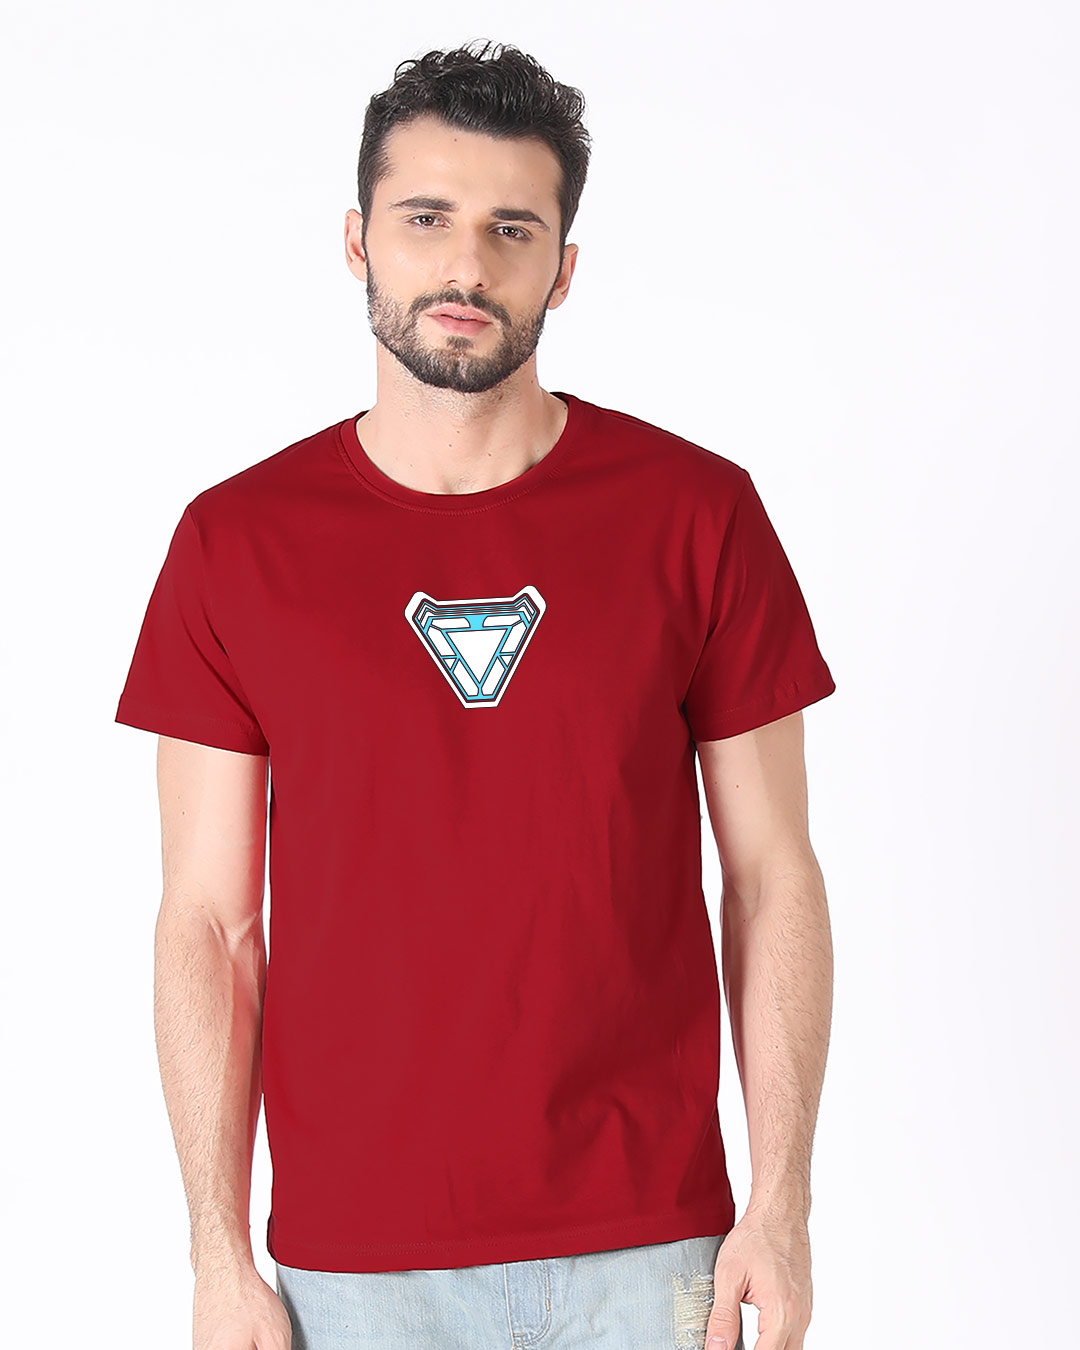 Shop Endgame Iron Man Glow In Dark Half Sleeve T-Shirt (AVEGL) -Back